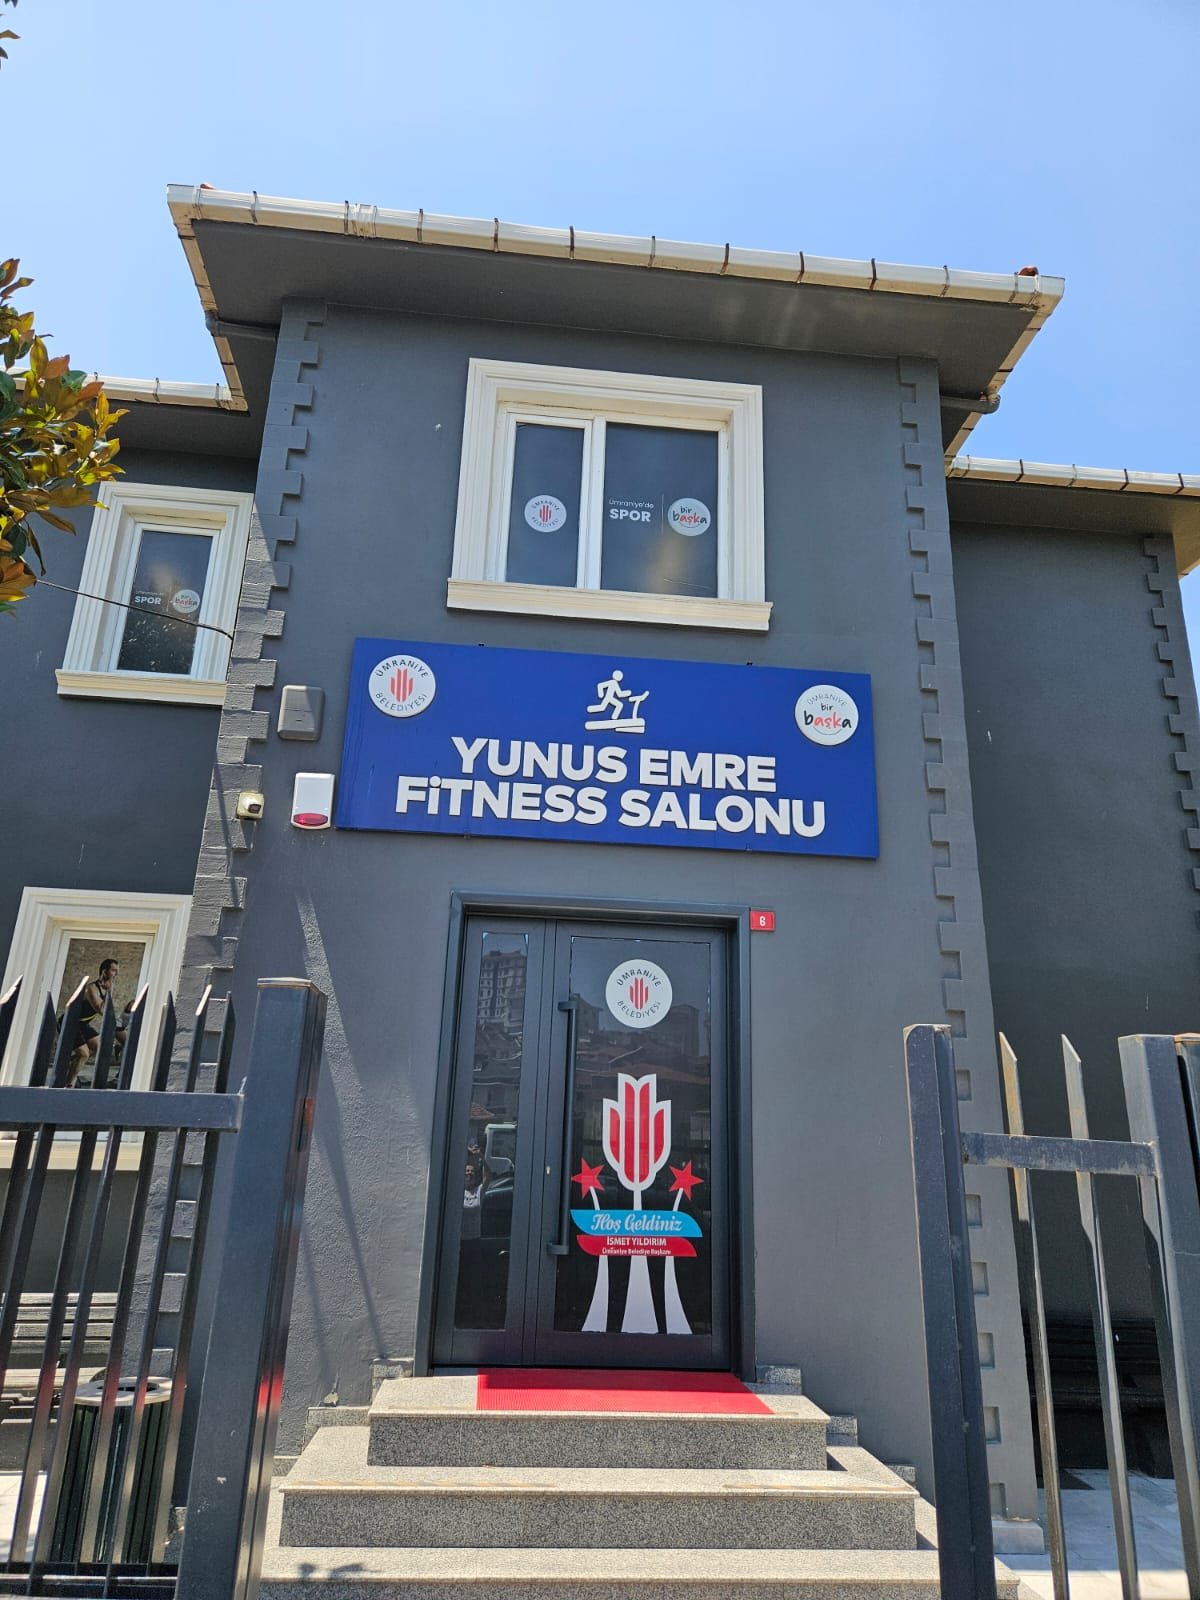 Yunus Emre Fitness Salonu